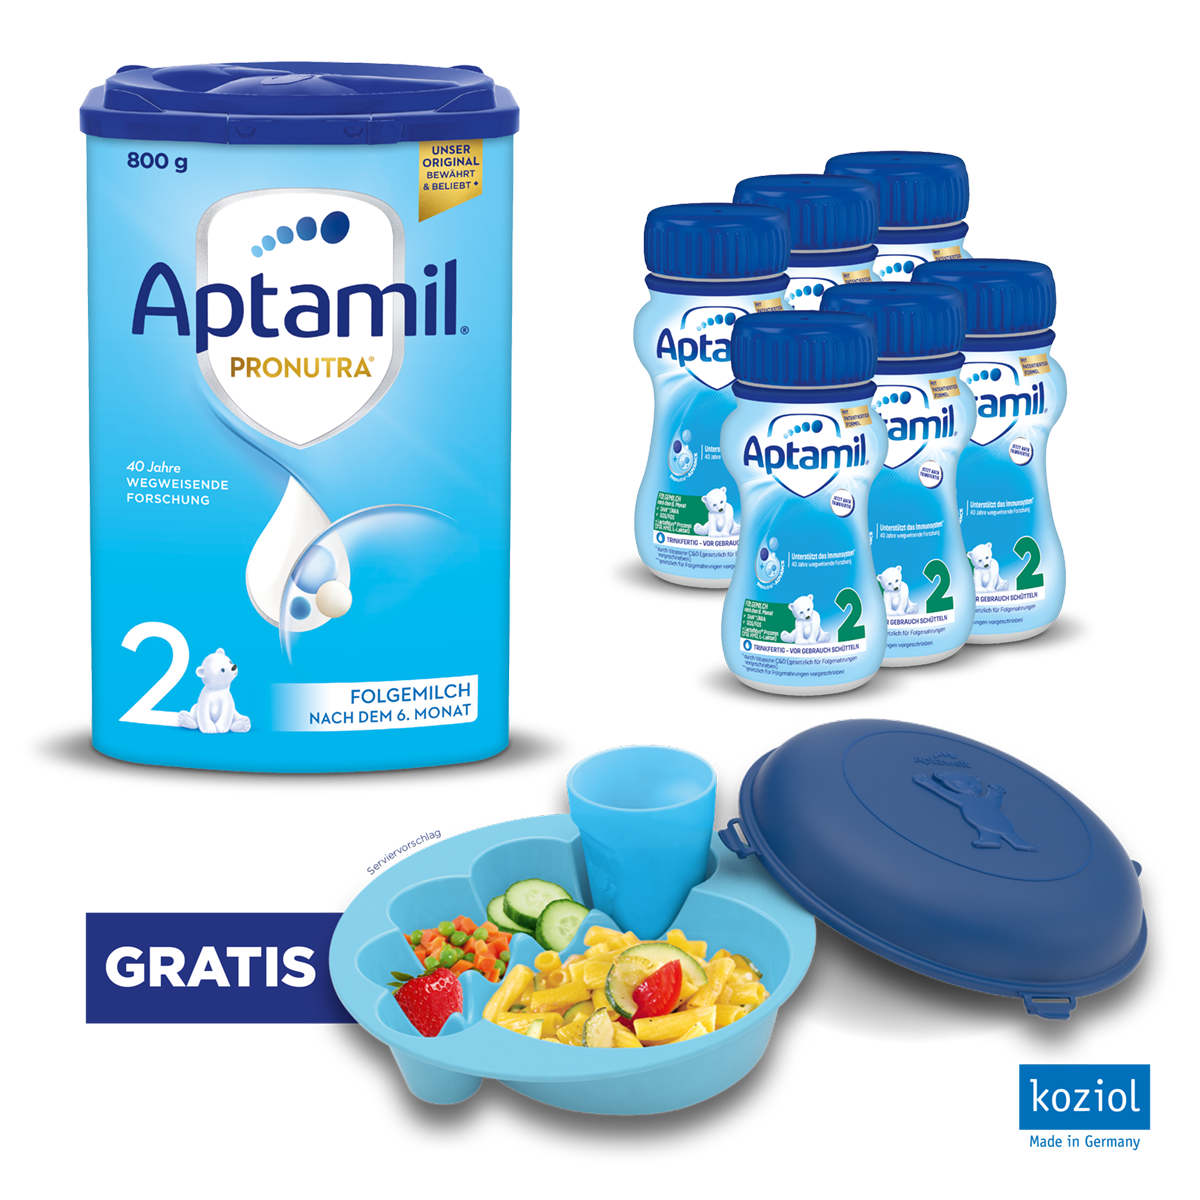 Limitiertes Aptamil Folgemilch-Paket mit Gratis Esslern-Set